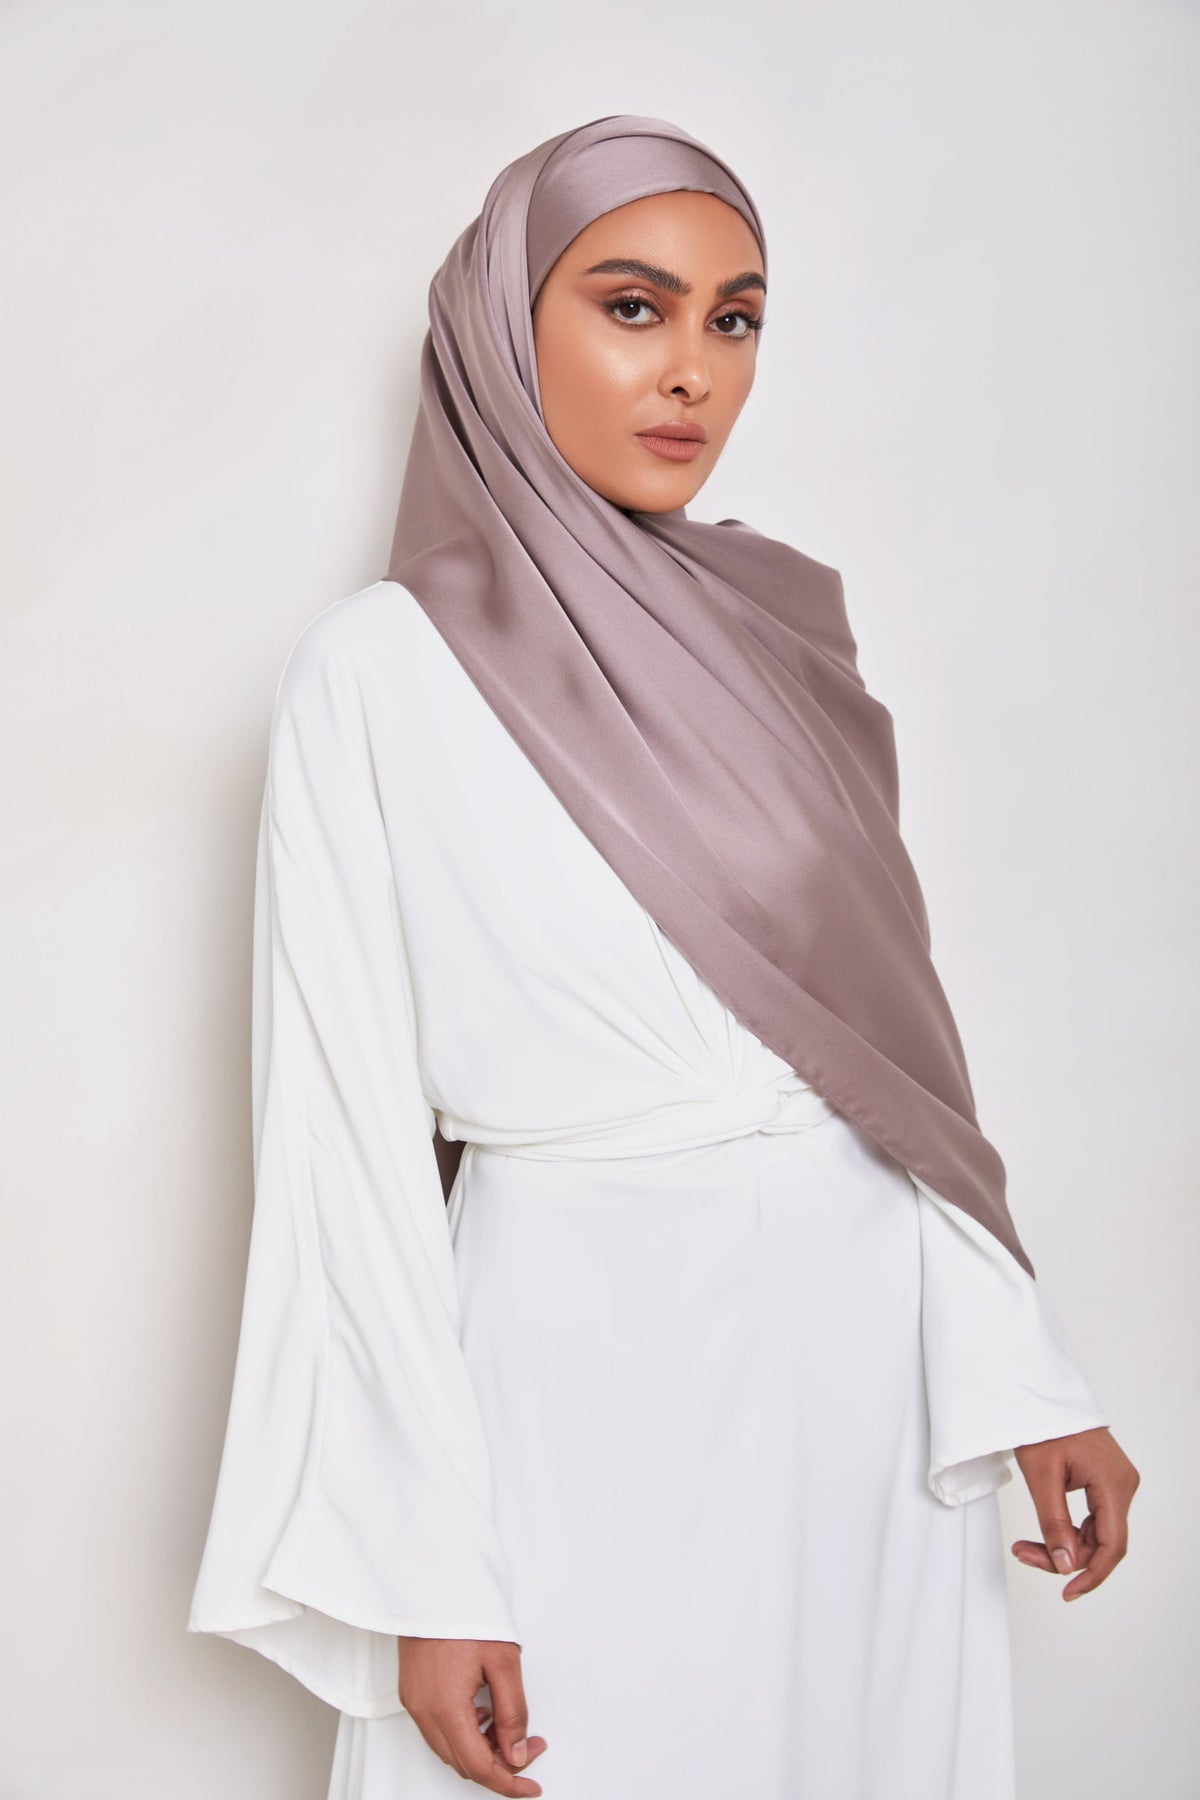 TEXTURE Satin Hijab - Luscious epschoolboard 